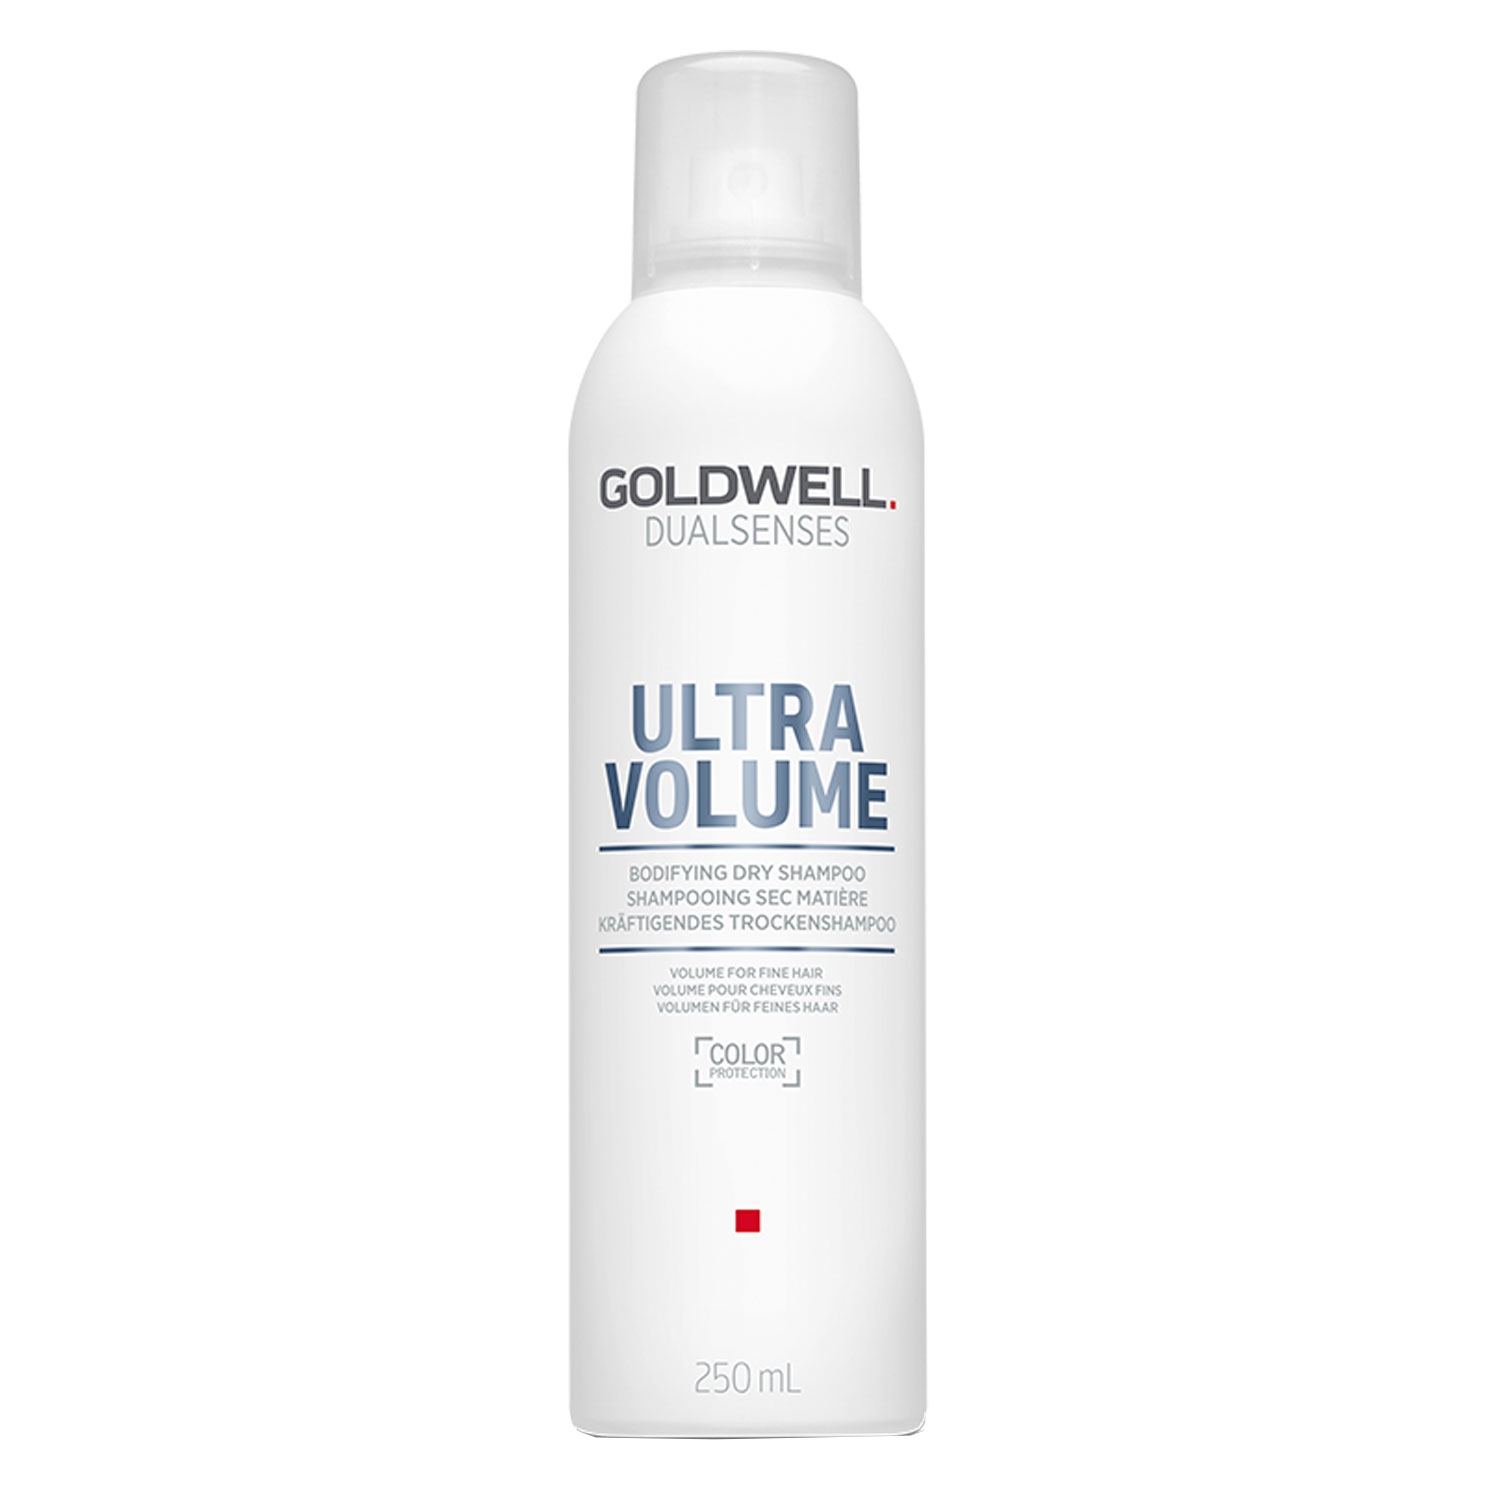 Produktbild von Dualsenses Ultra Volume - Bodifying Dry Shampoo